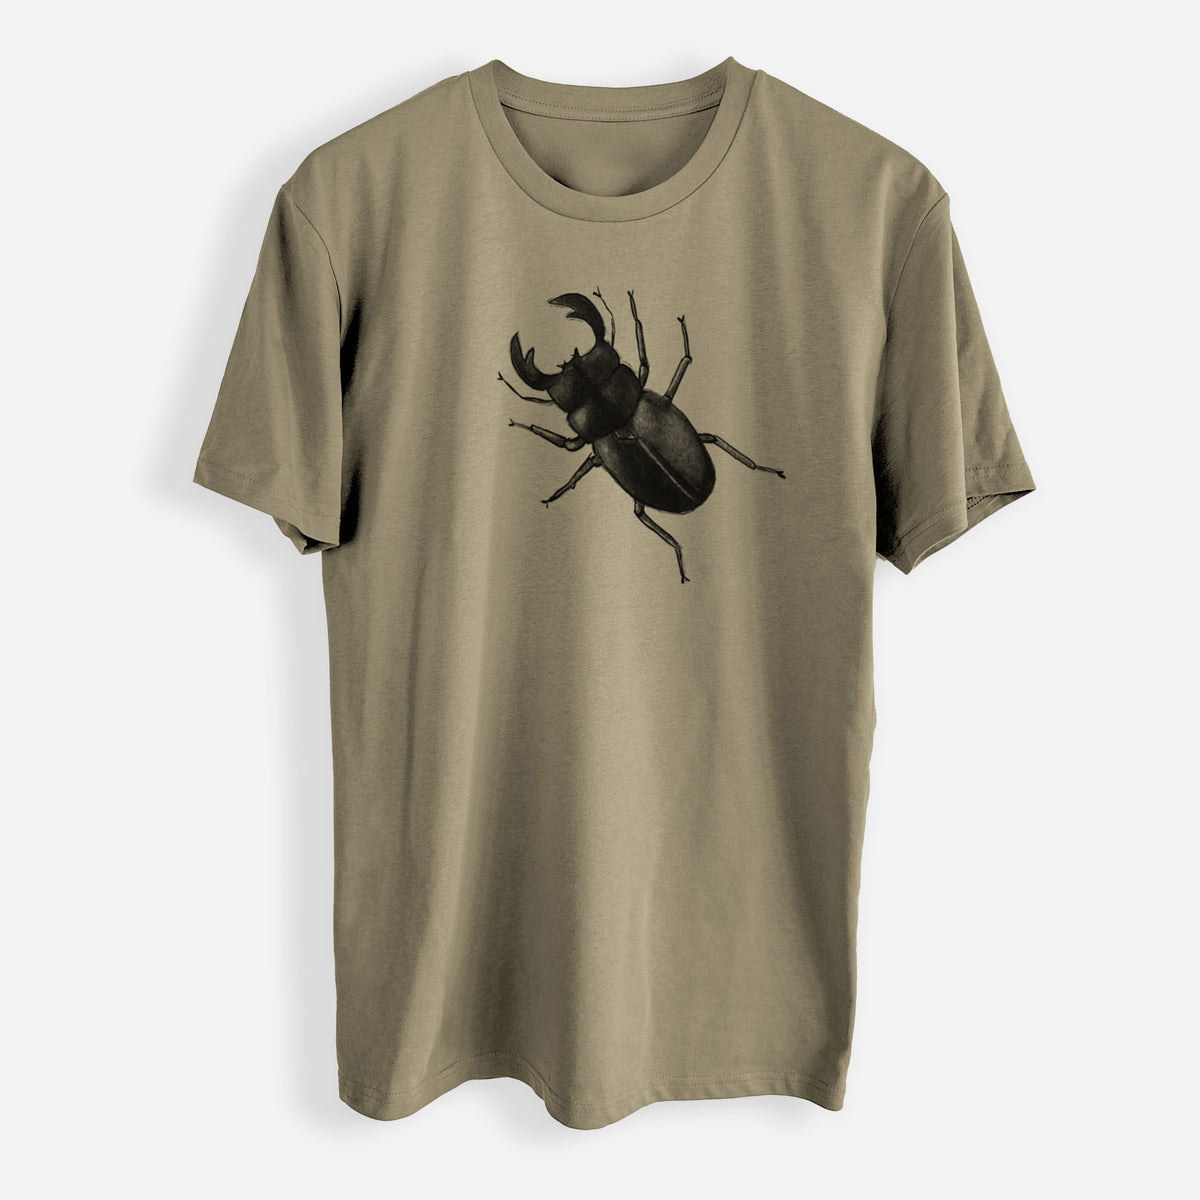 Dorcus titanus - Giant Stag Beetle - Mens Everyday Staple Tee